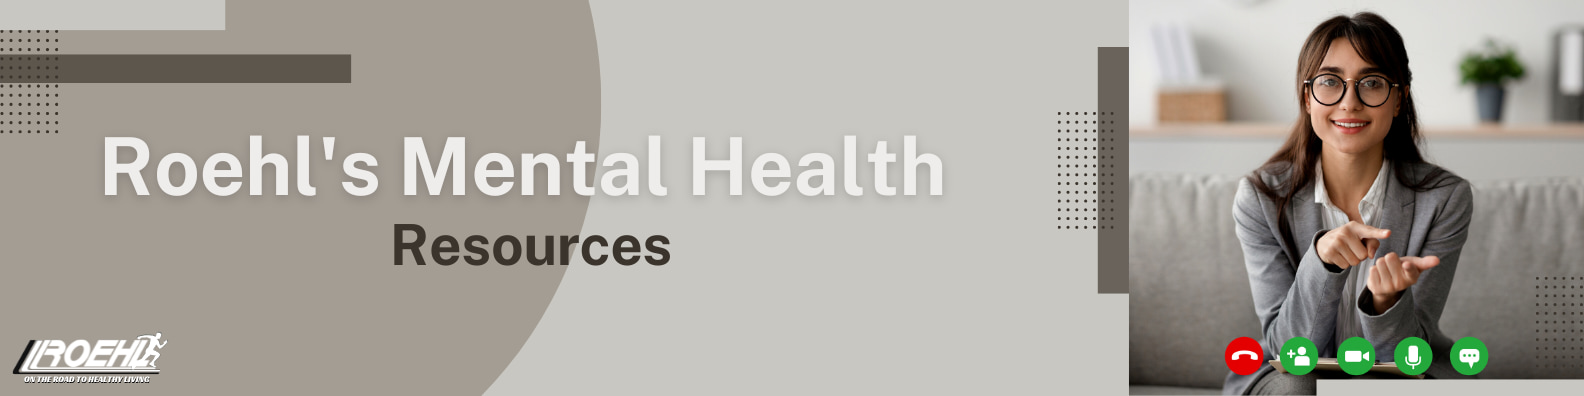 Roehl's Mental Health Resources